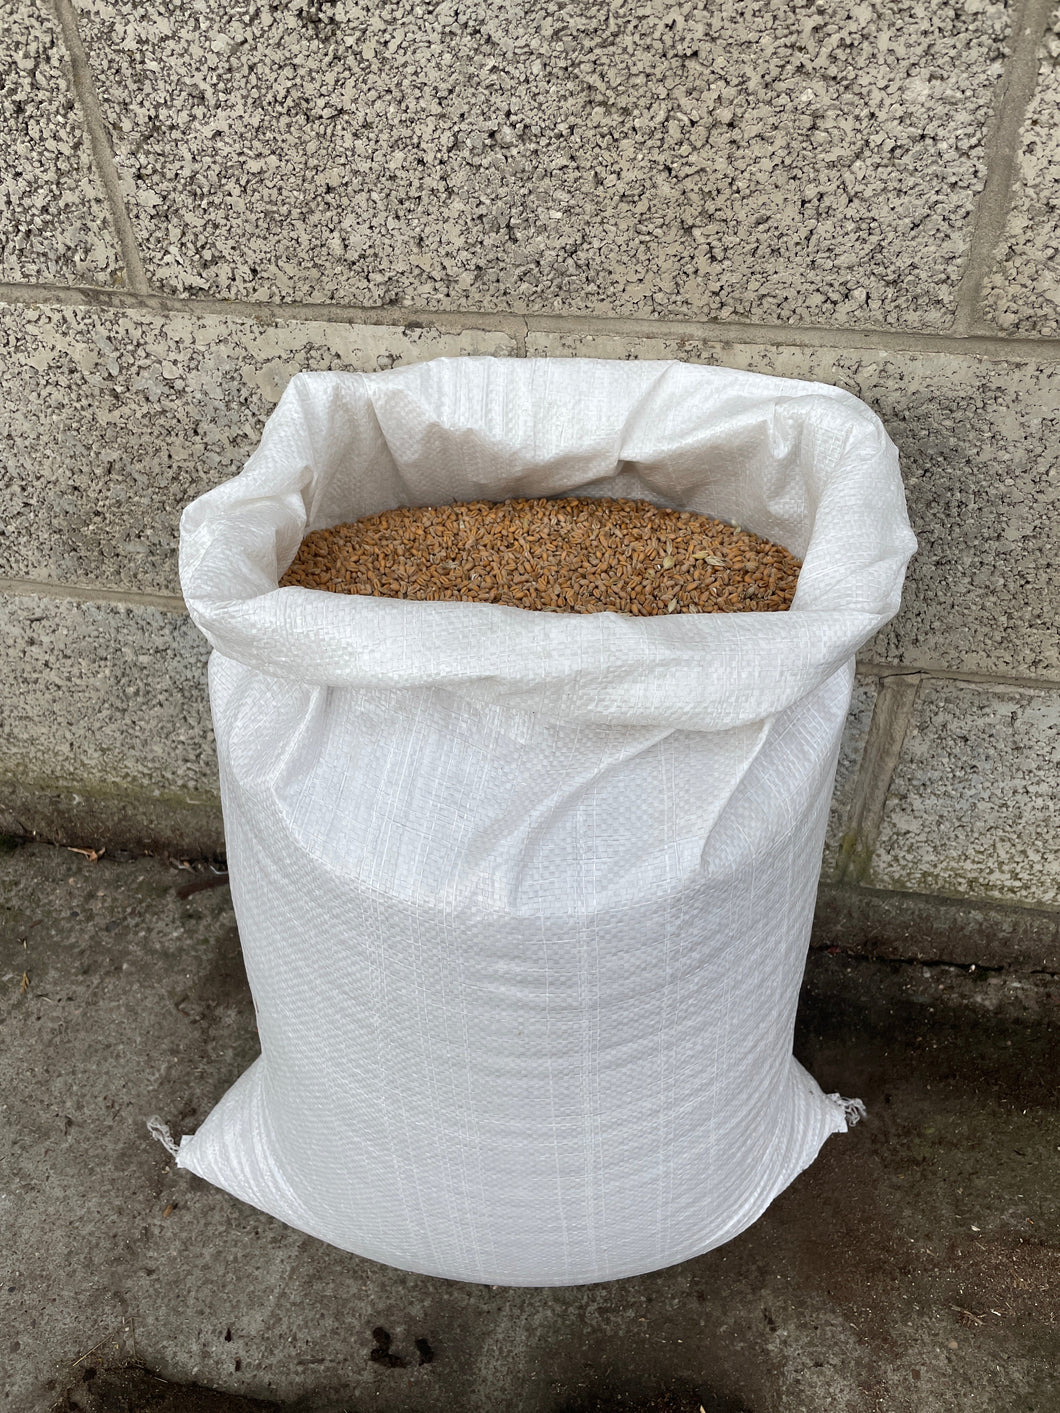 25kg Bag of Wheat